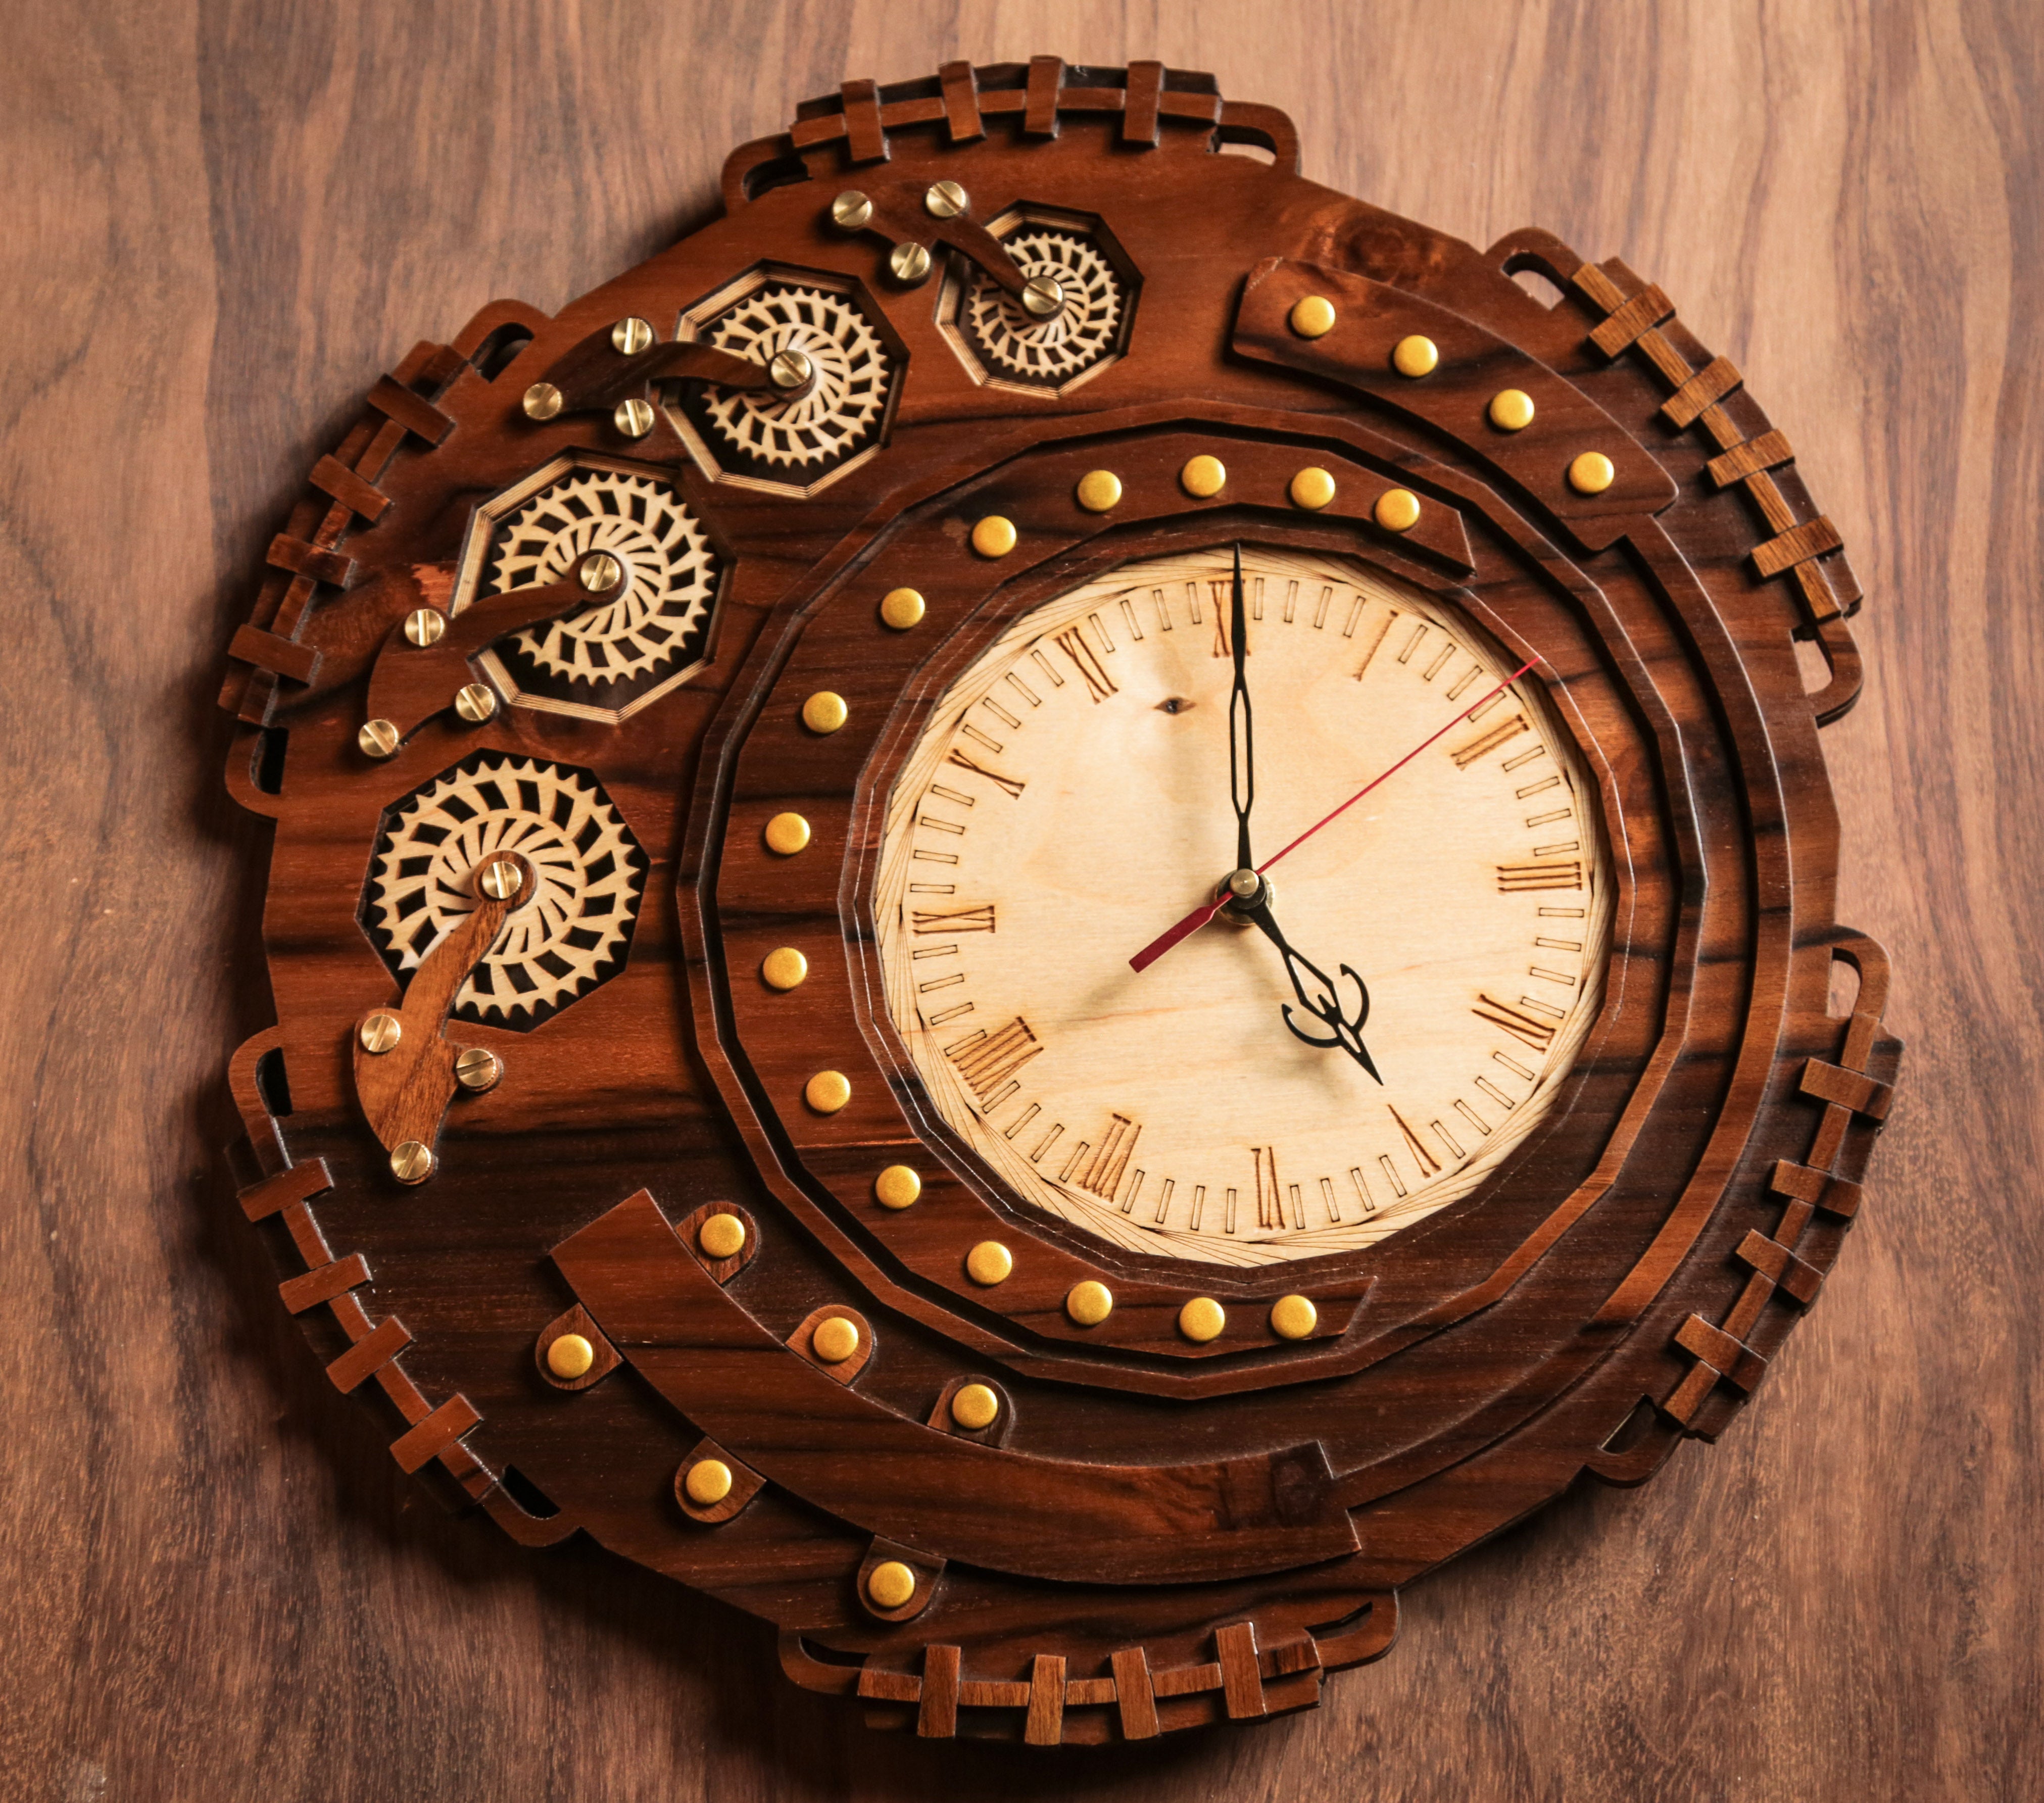 Steampunk - Qreative Qick Wooden Wall Clock | Wall Clock | Wooden Wall Art | Vintage Clocks | Clocks to Gift | Gear Clock | Steam punk